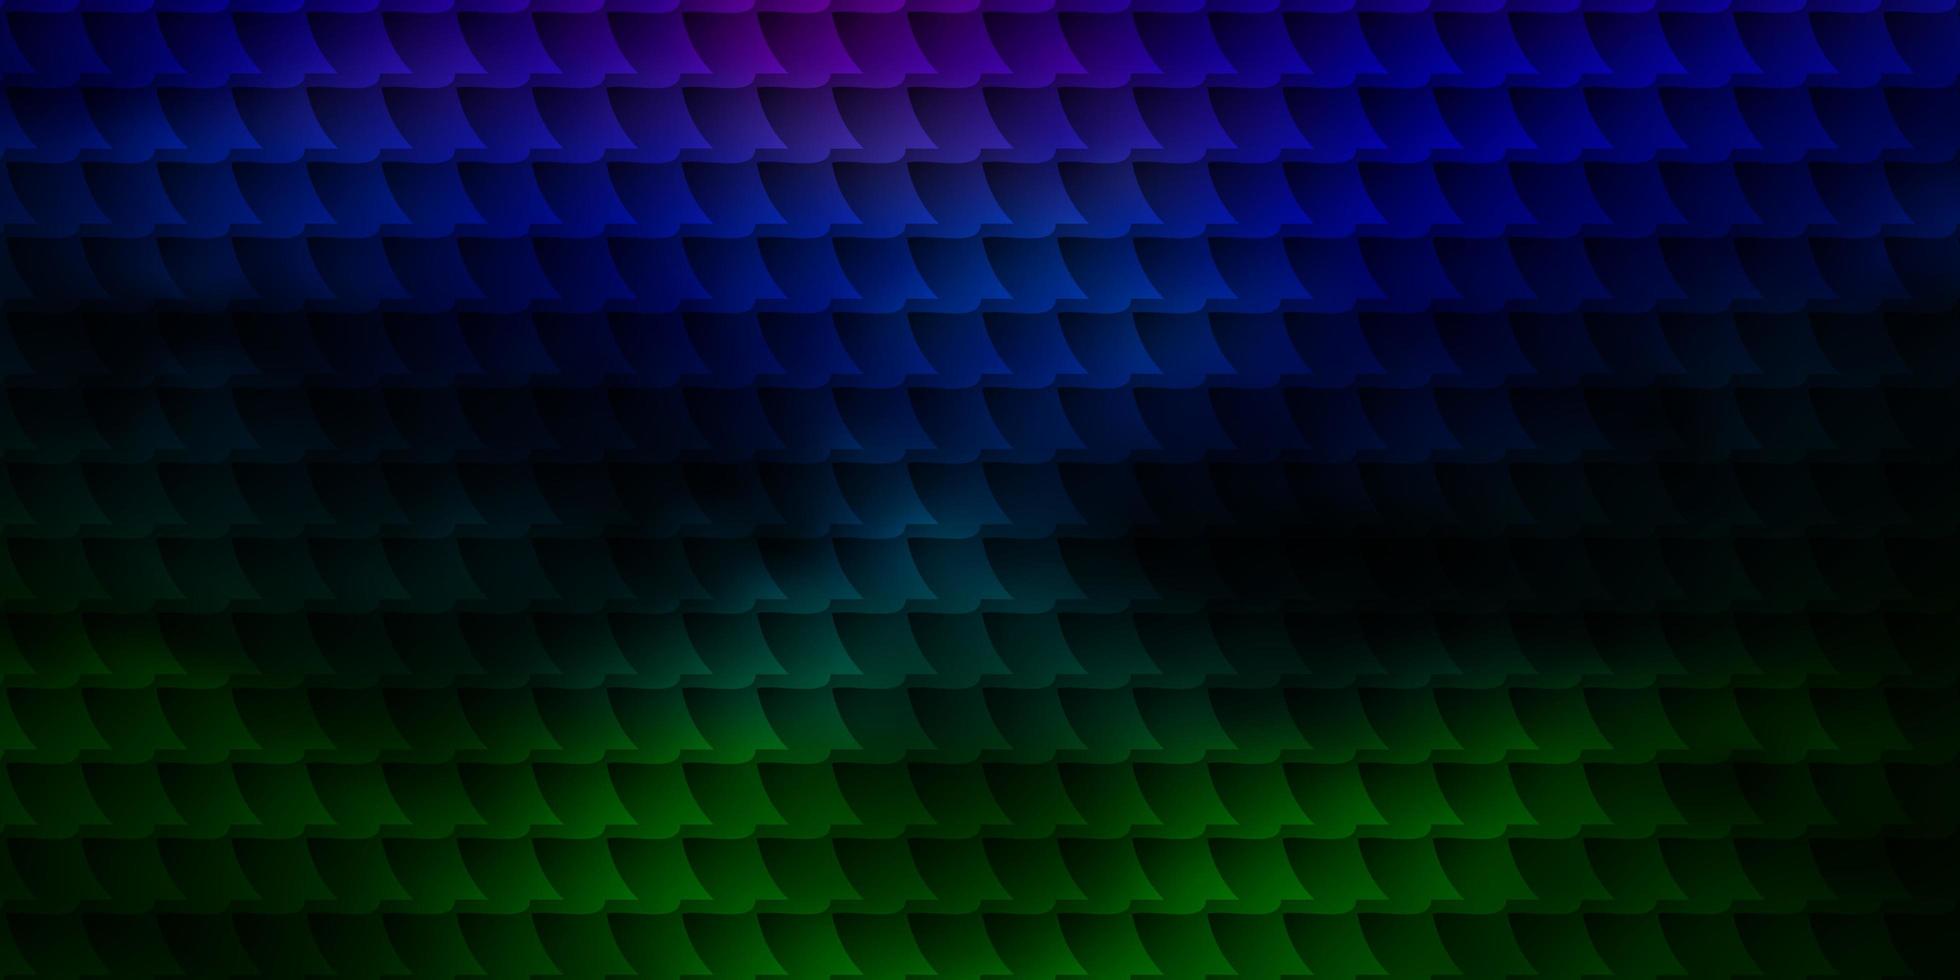 textura de vetor multicolorido escuro em estilo retangular.